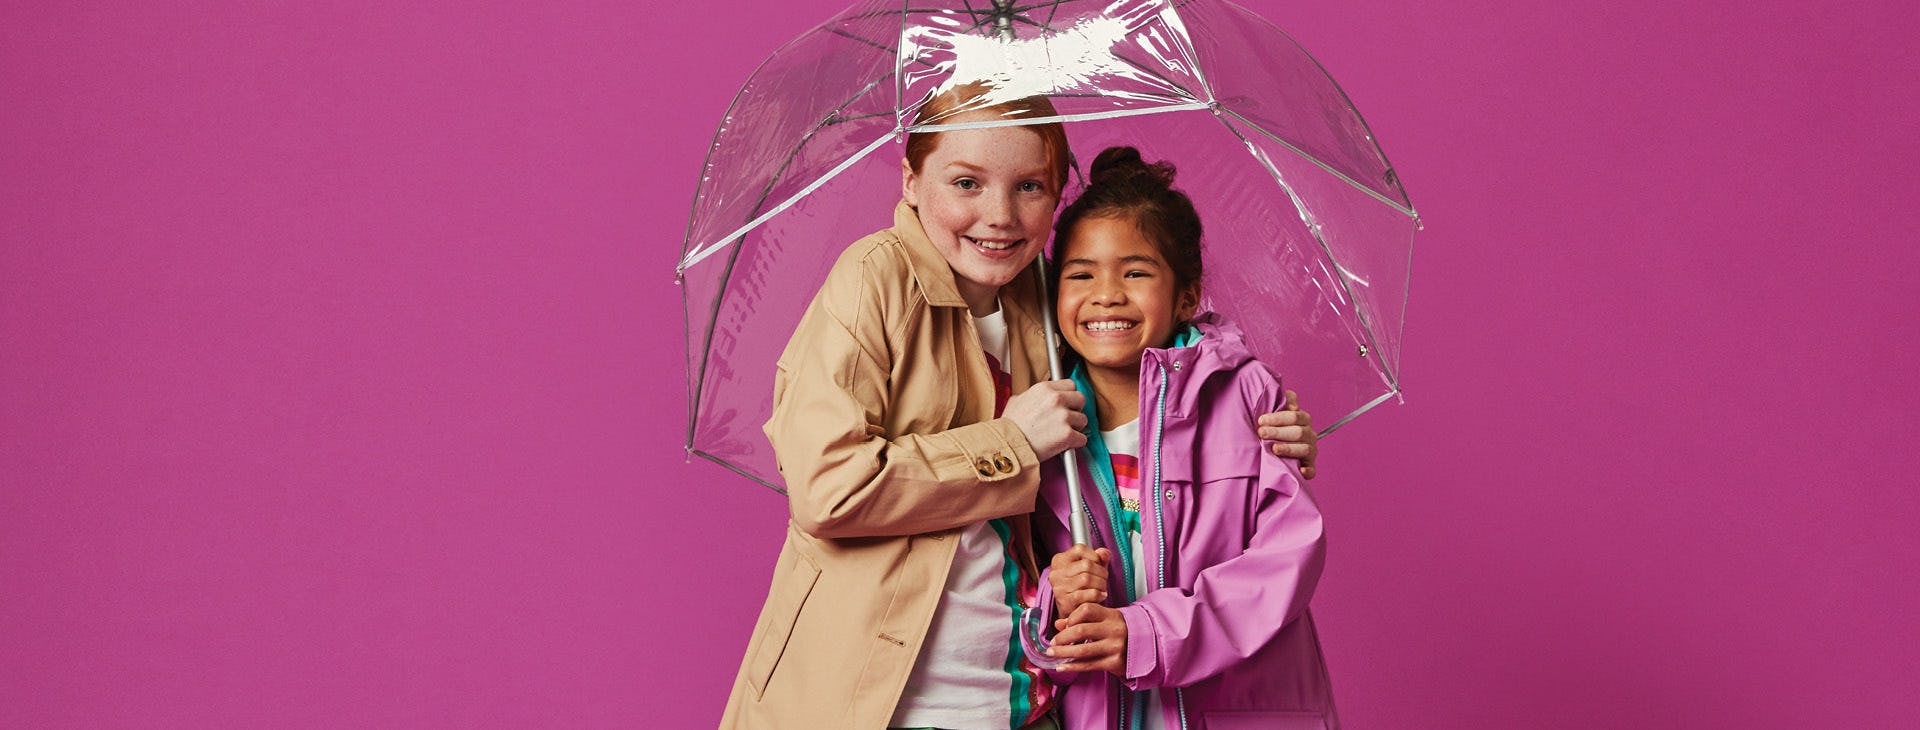 girls with umbrella